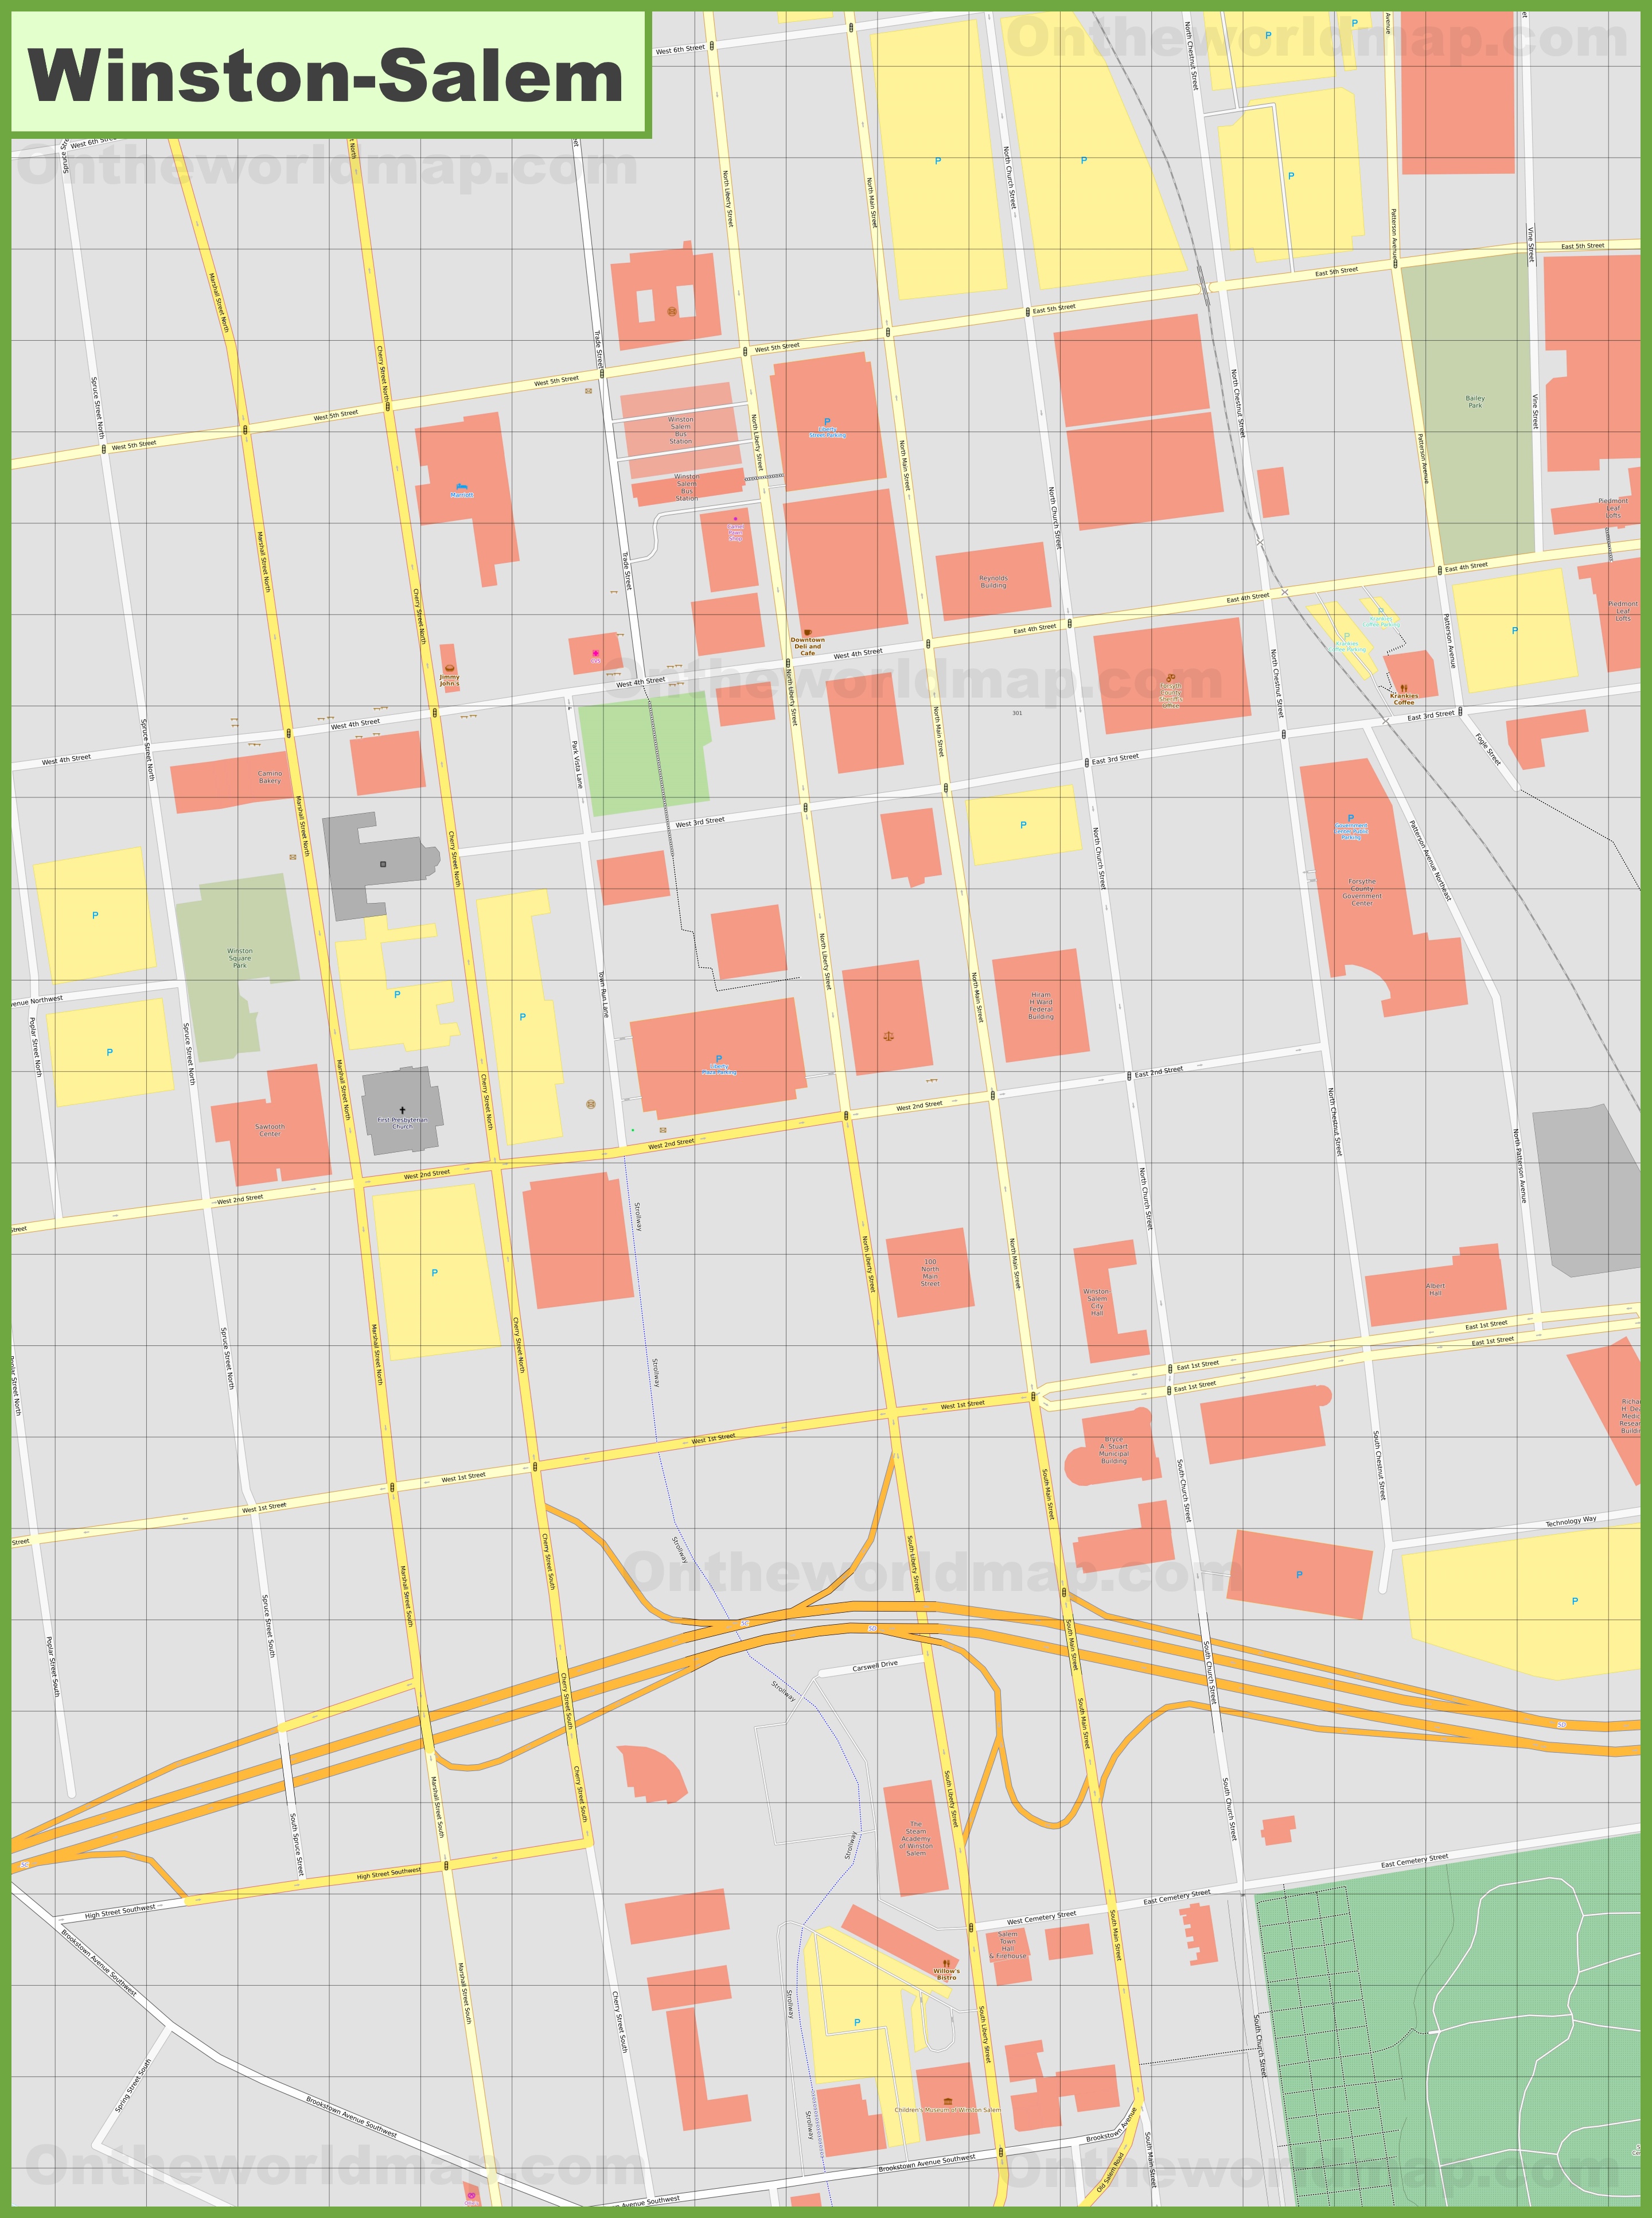 Winston-Salem downtown map